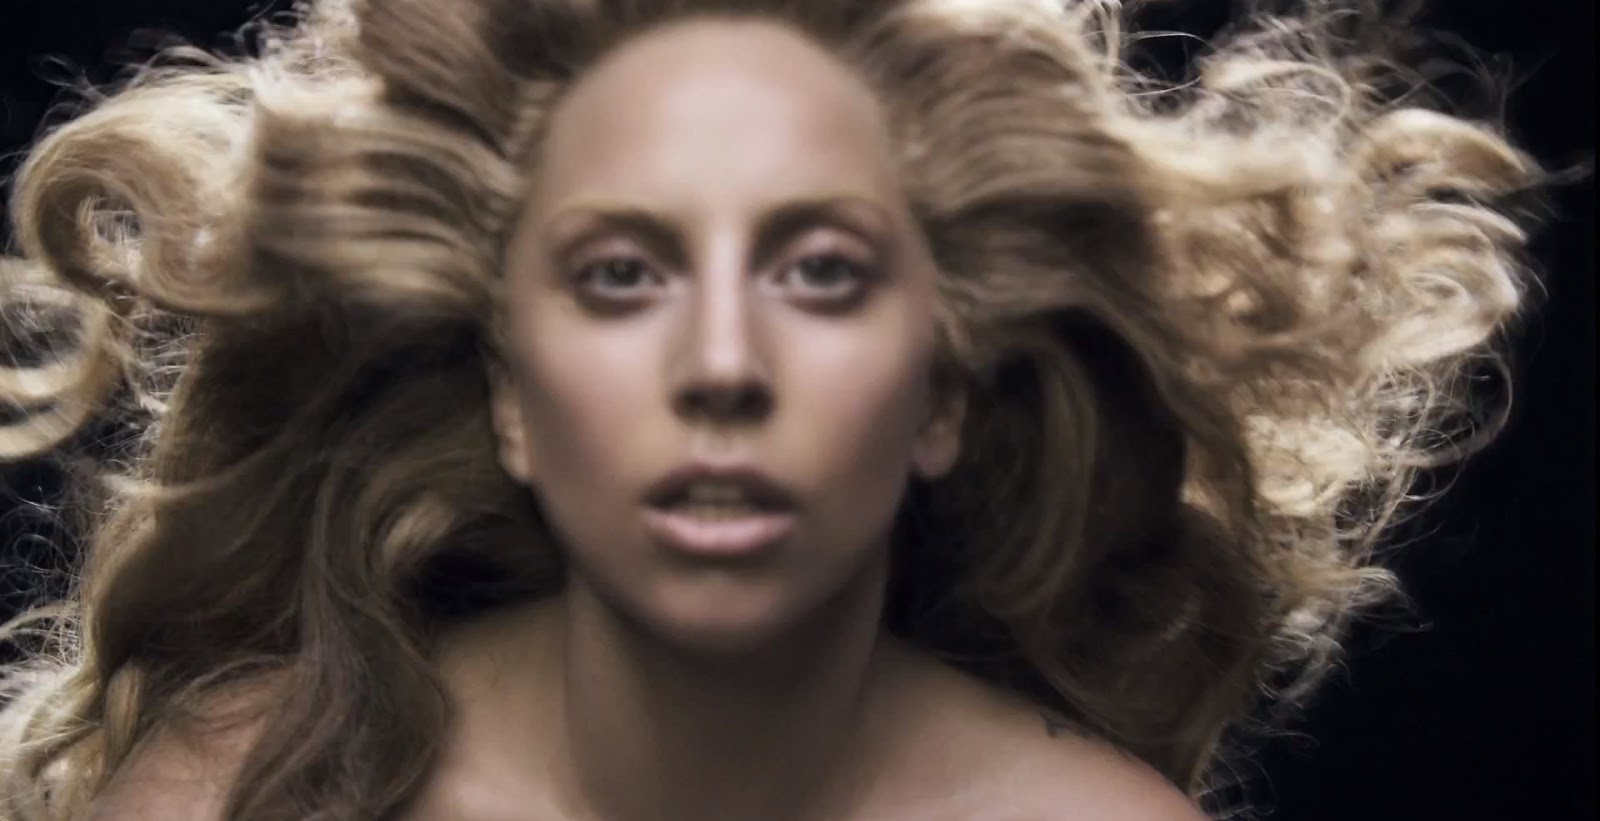 Applause леди гага. Леди Гага Аплаус. Леди Гага аплодисменты. Анимация леди Гага. Леди Гага Эра артпоп.